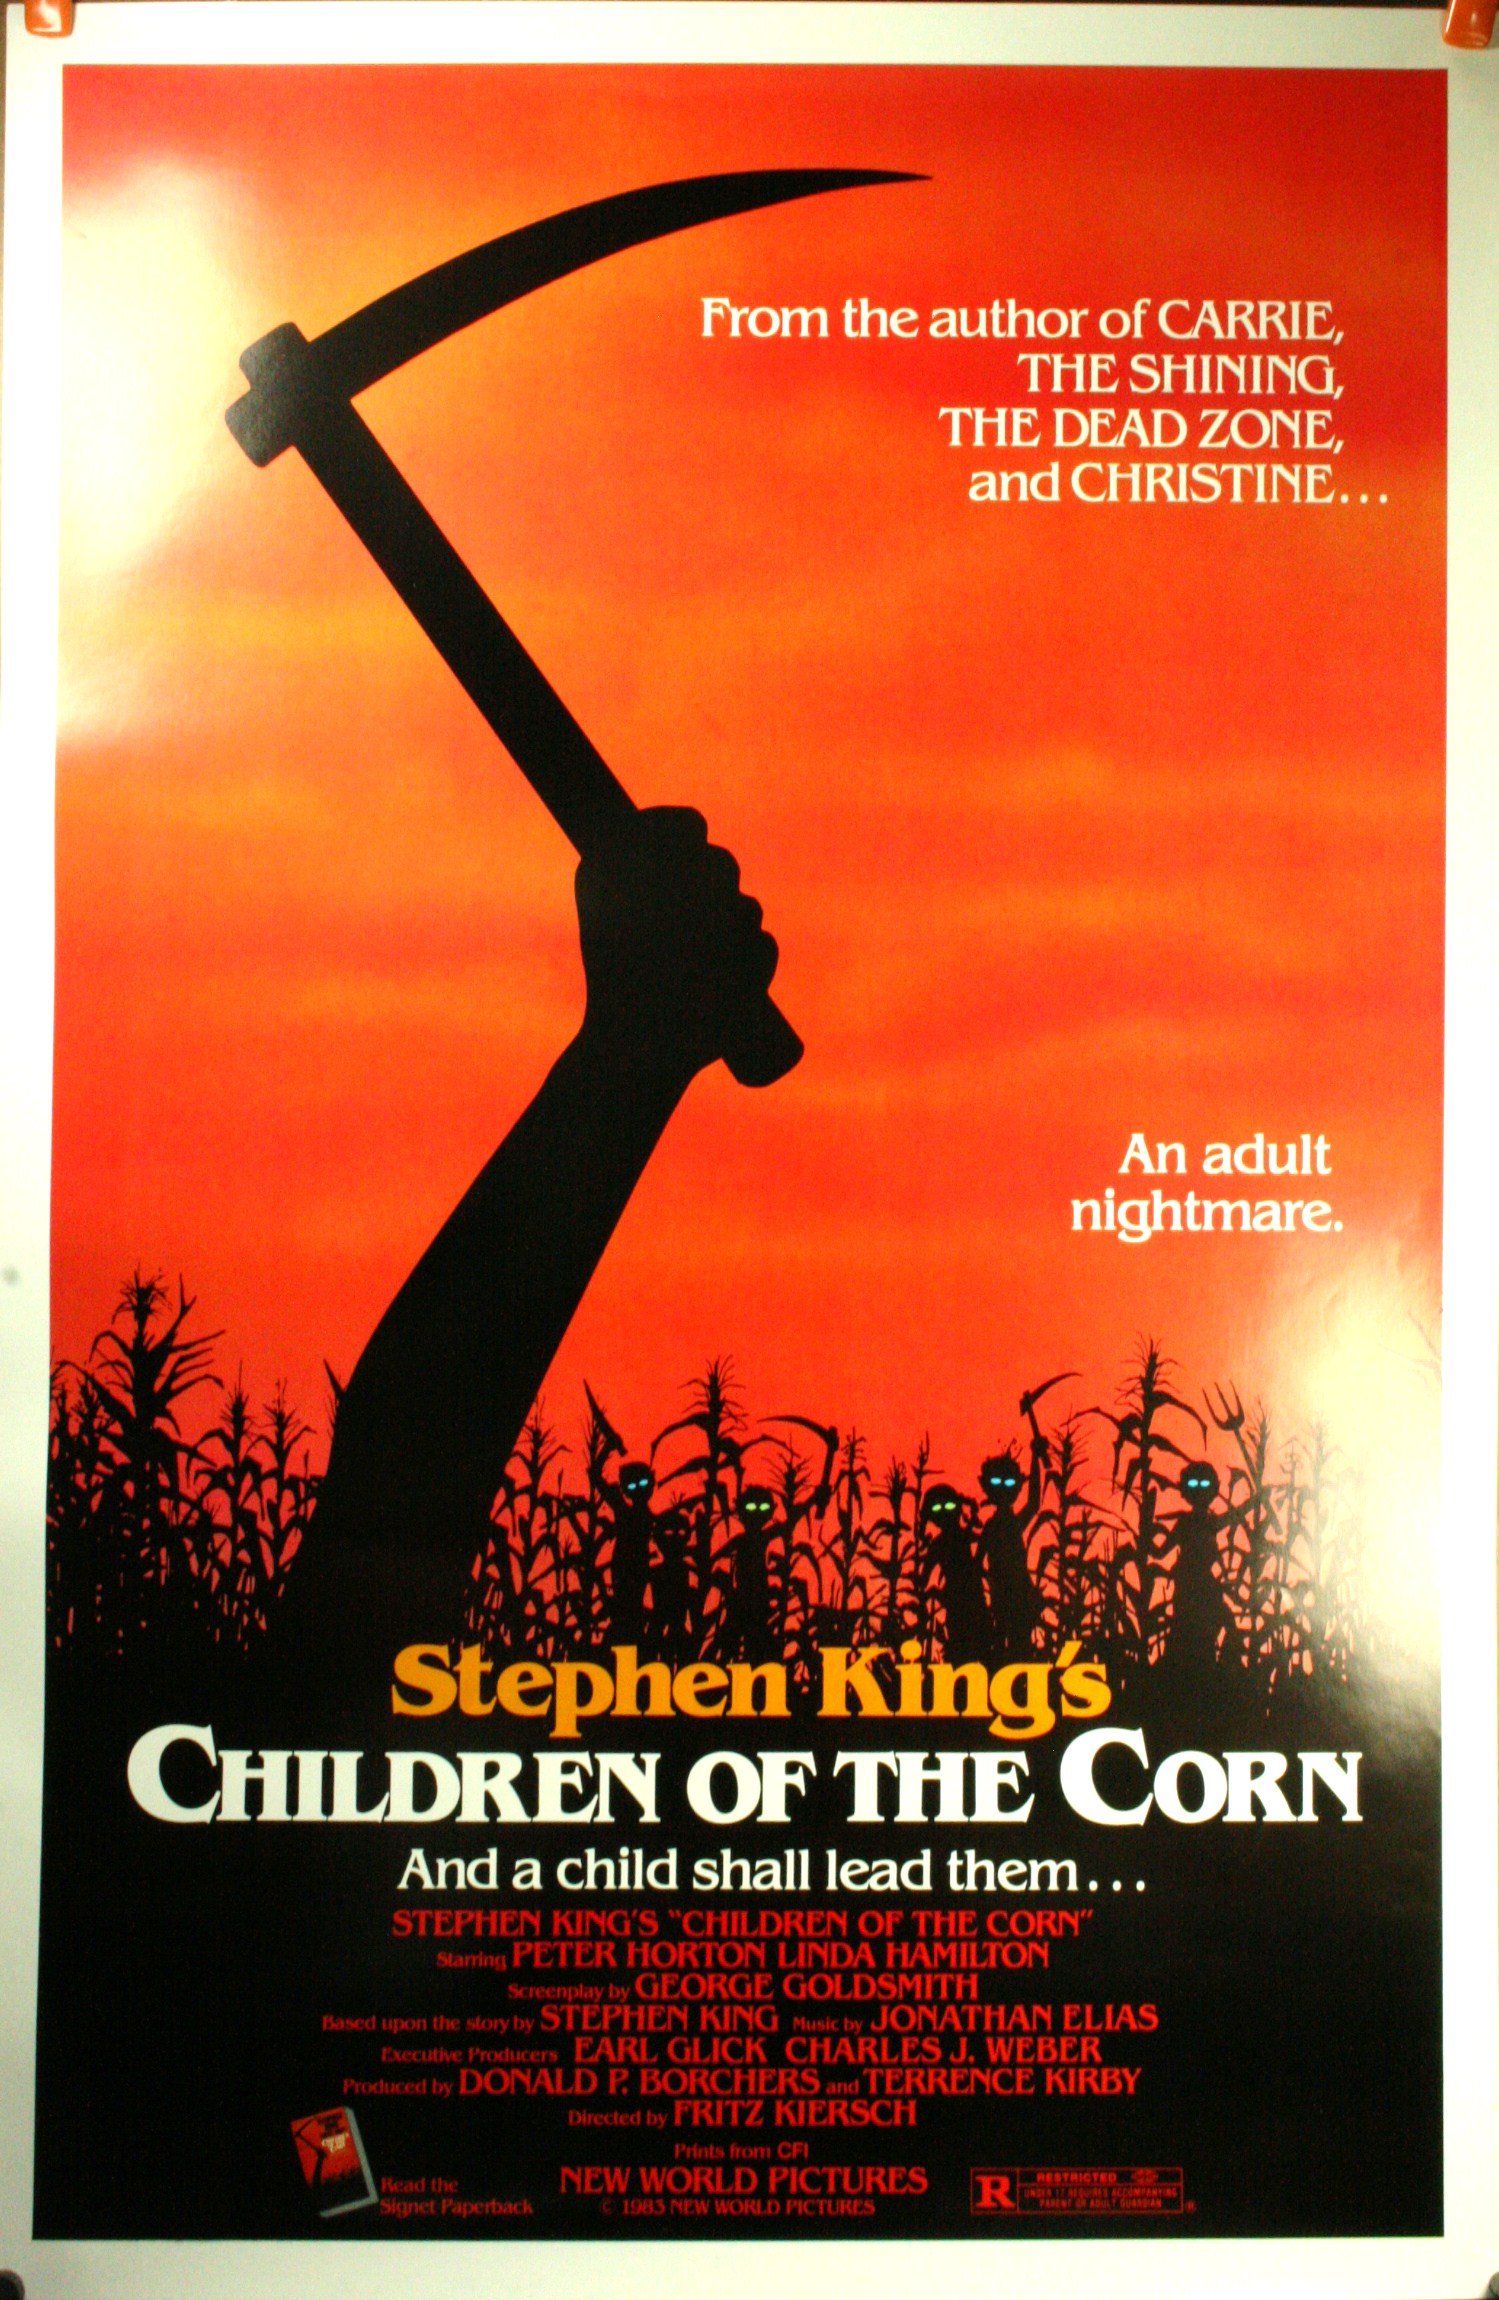 https://originalvintagemovieposters.com/wp-content/uploads/2012/07/Children-of-the-Corn.jpg